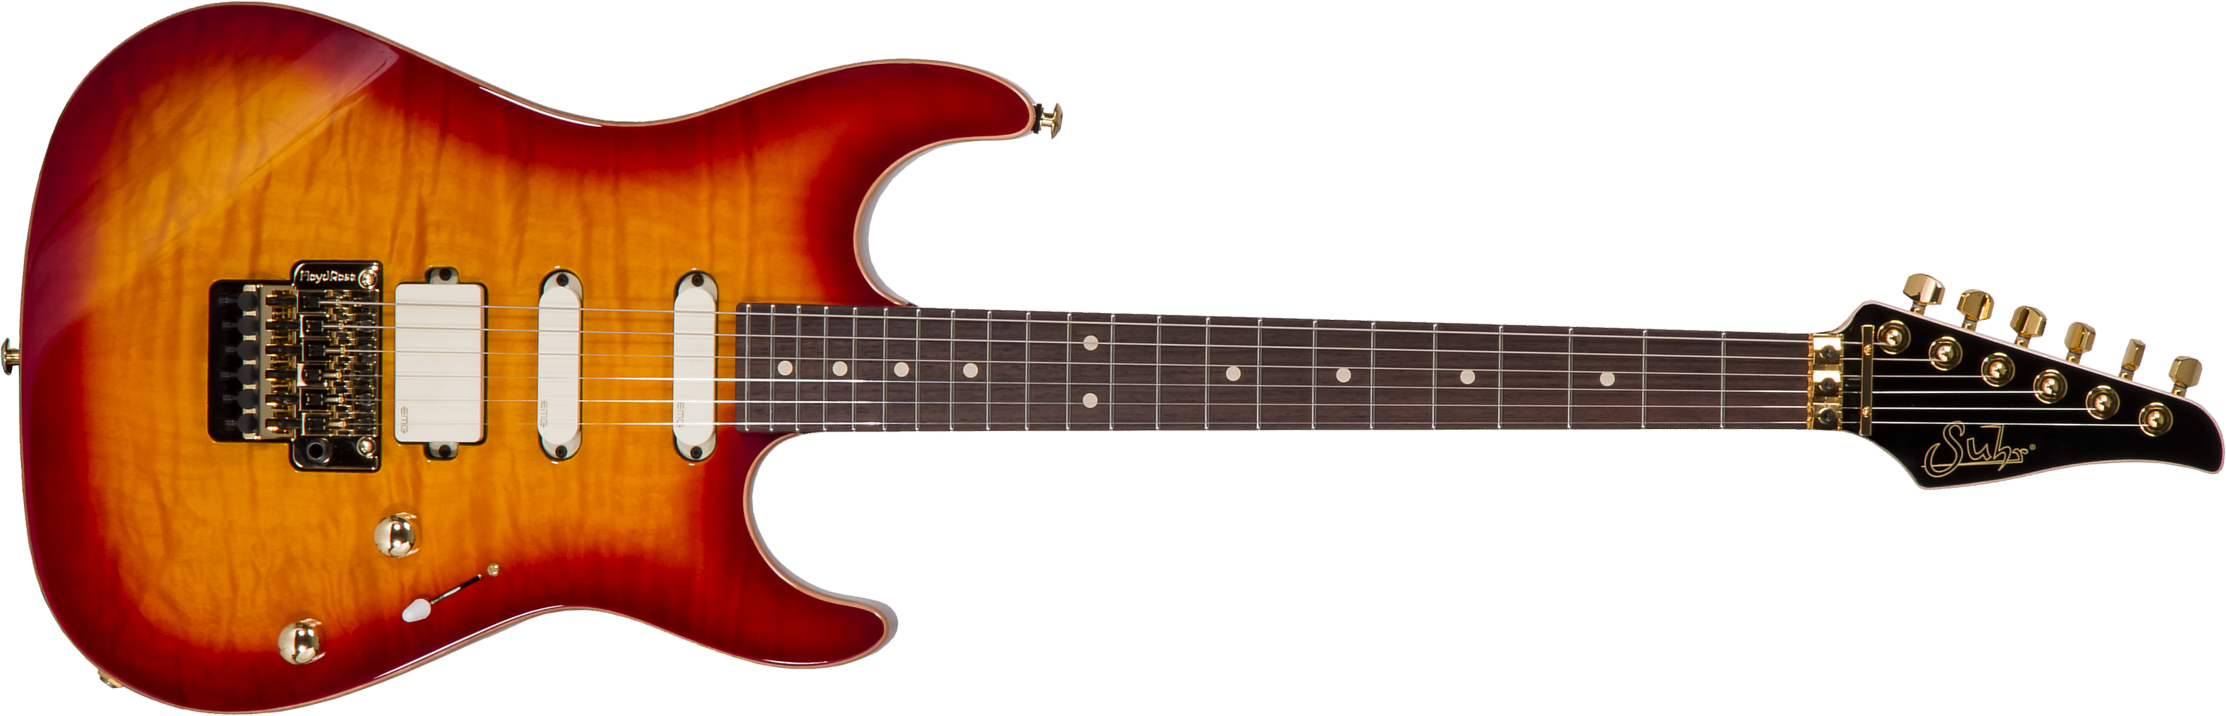 Suhr Standard Legacy 01-ltd-0030 Hss Emg Fr Rw #70282 - Aged Cherry Burst - Str shape electric guitar - Main picture